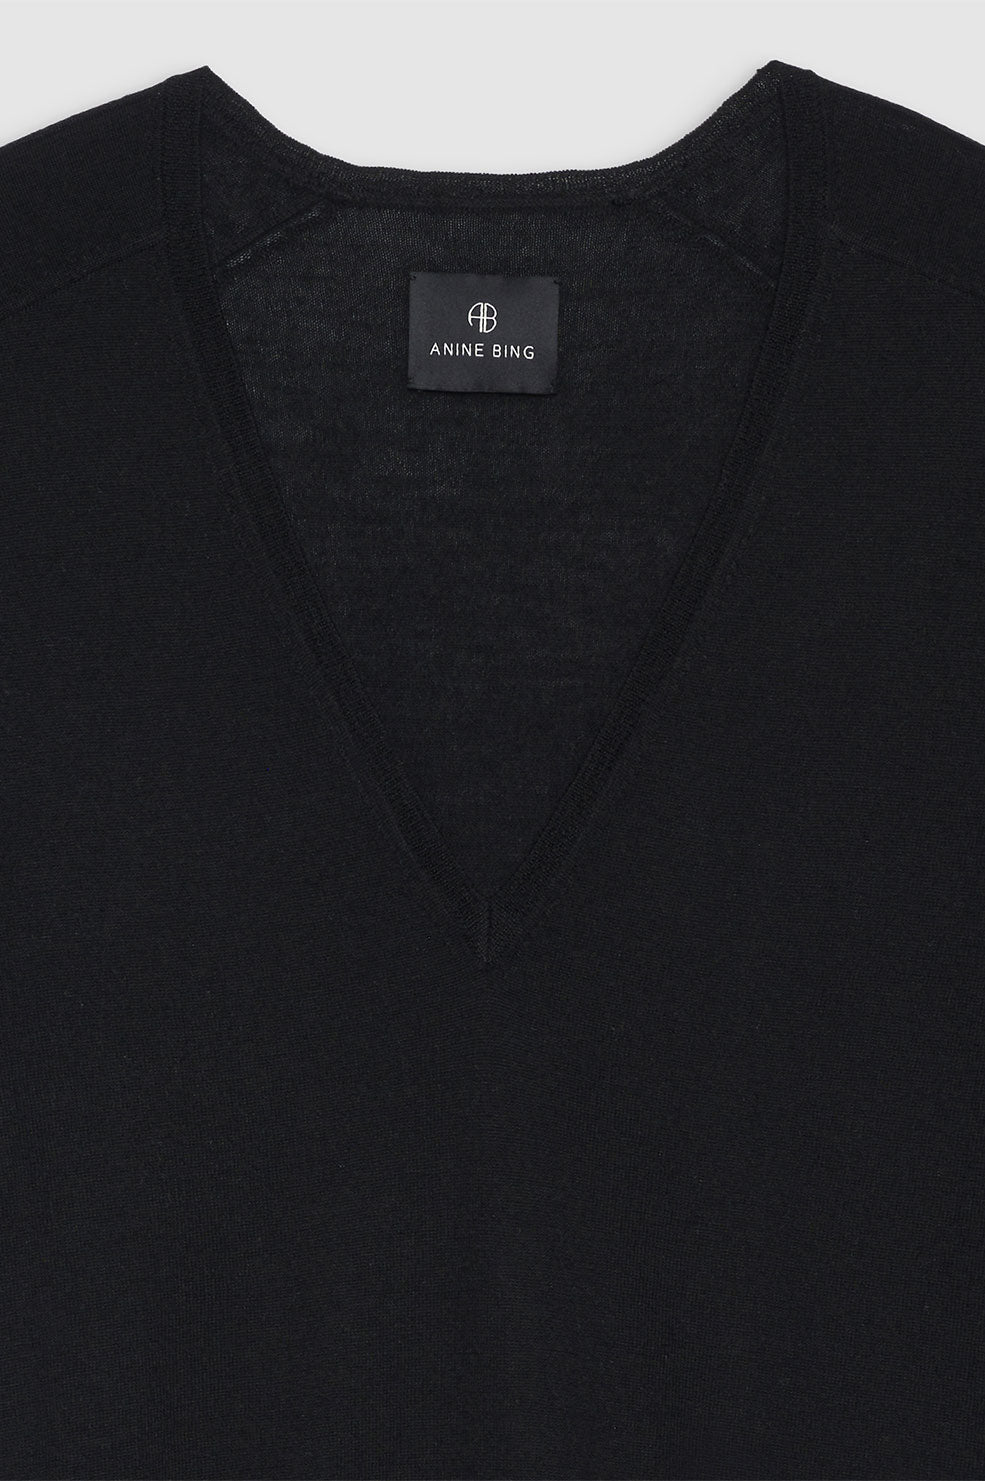 ANINE BING Aria Sweater - Black - Detail View